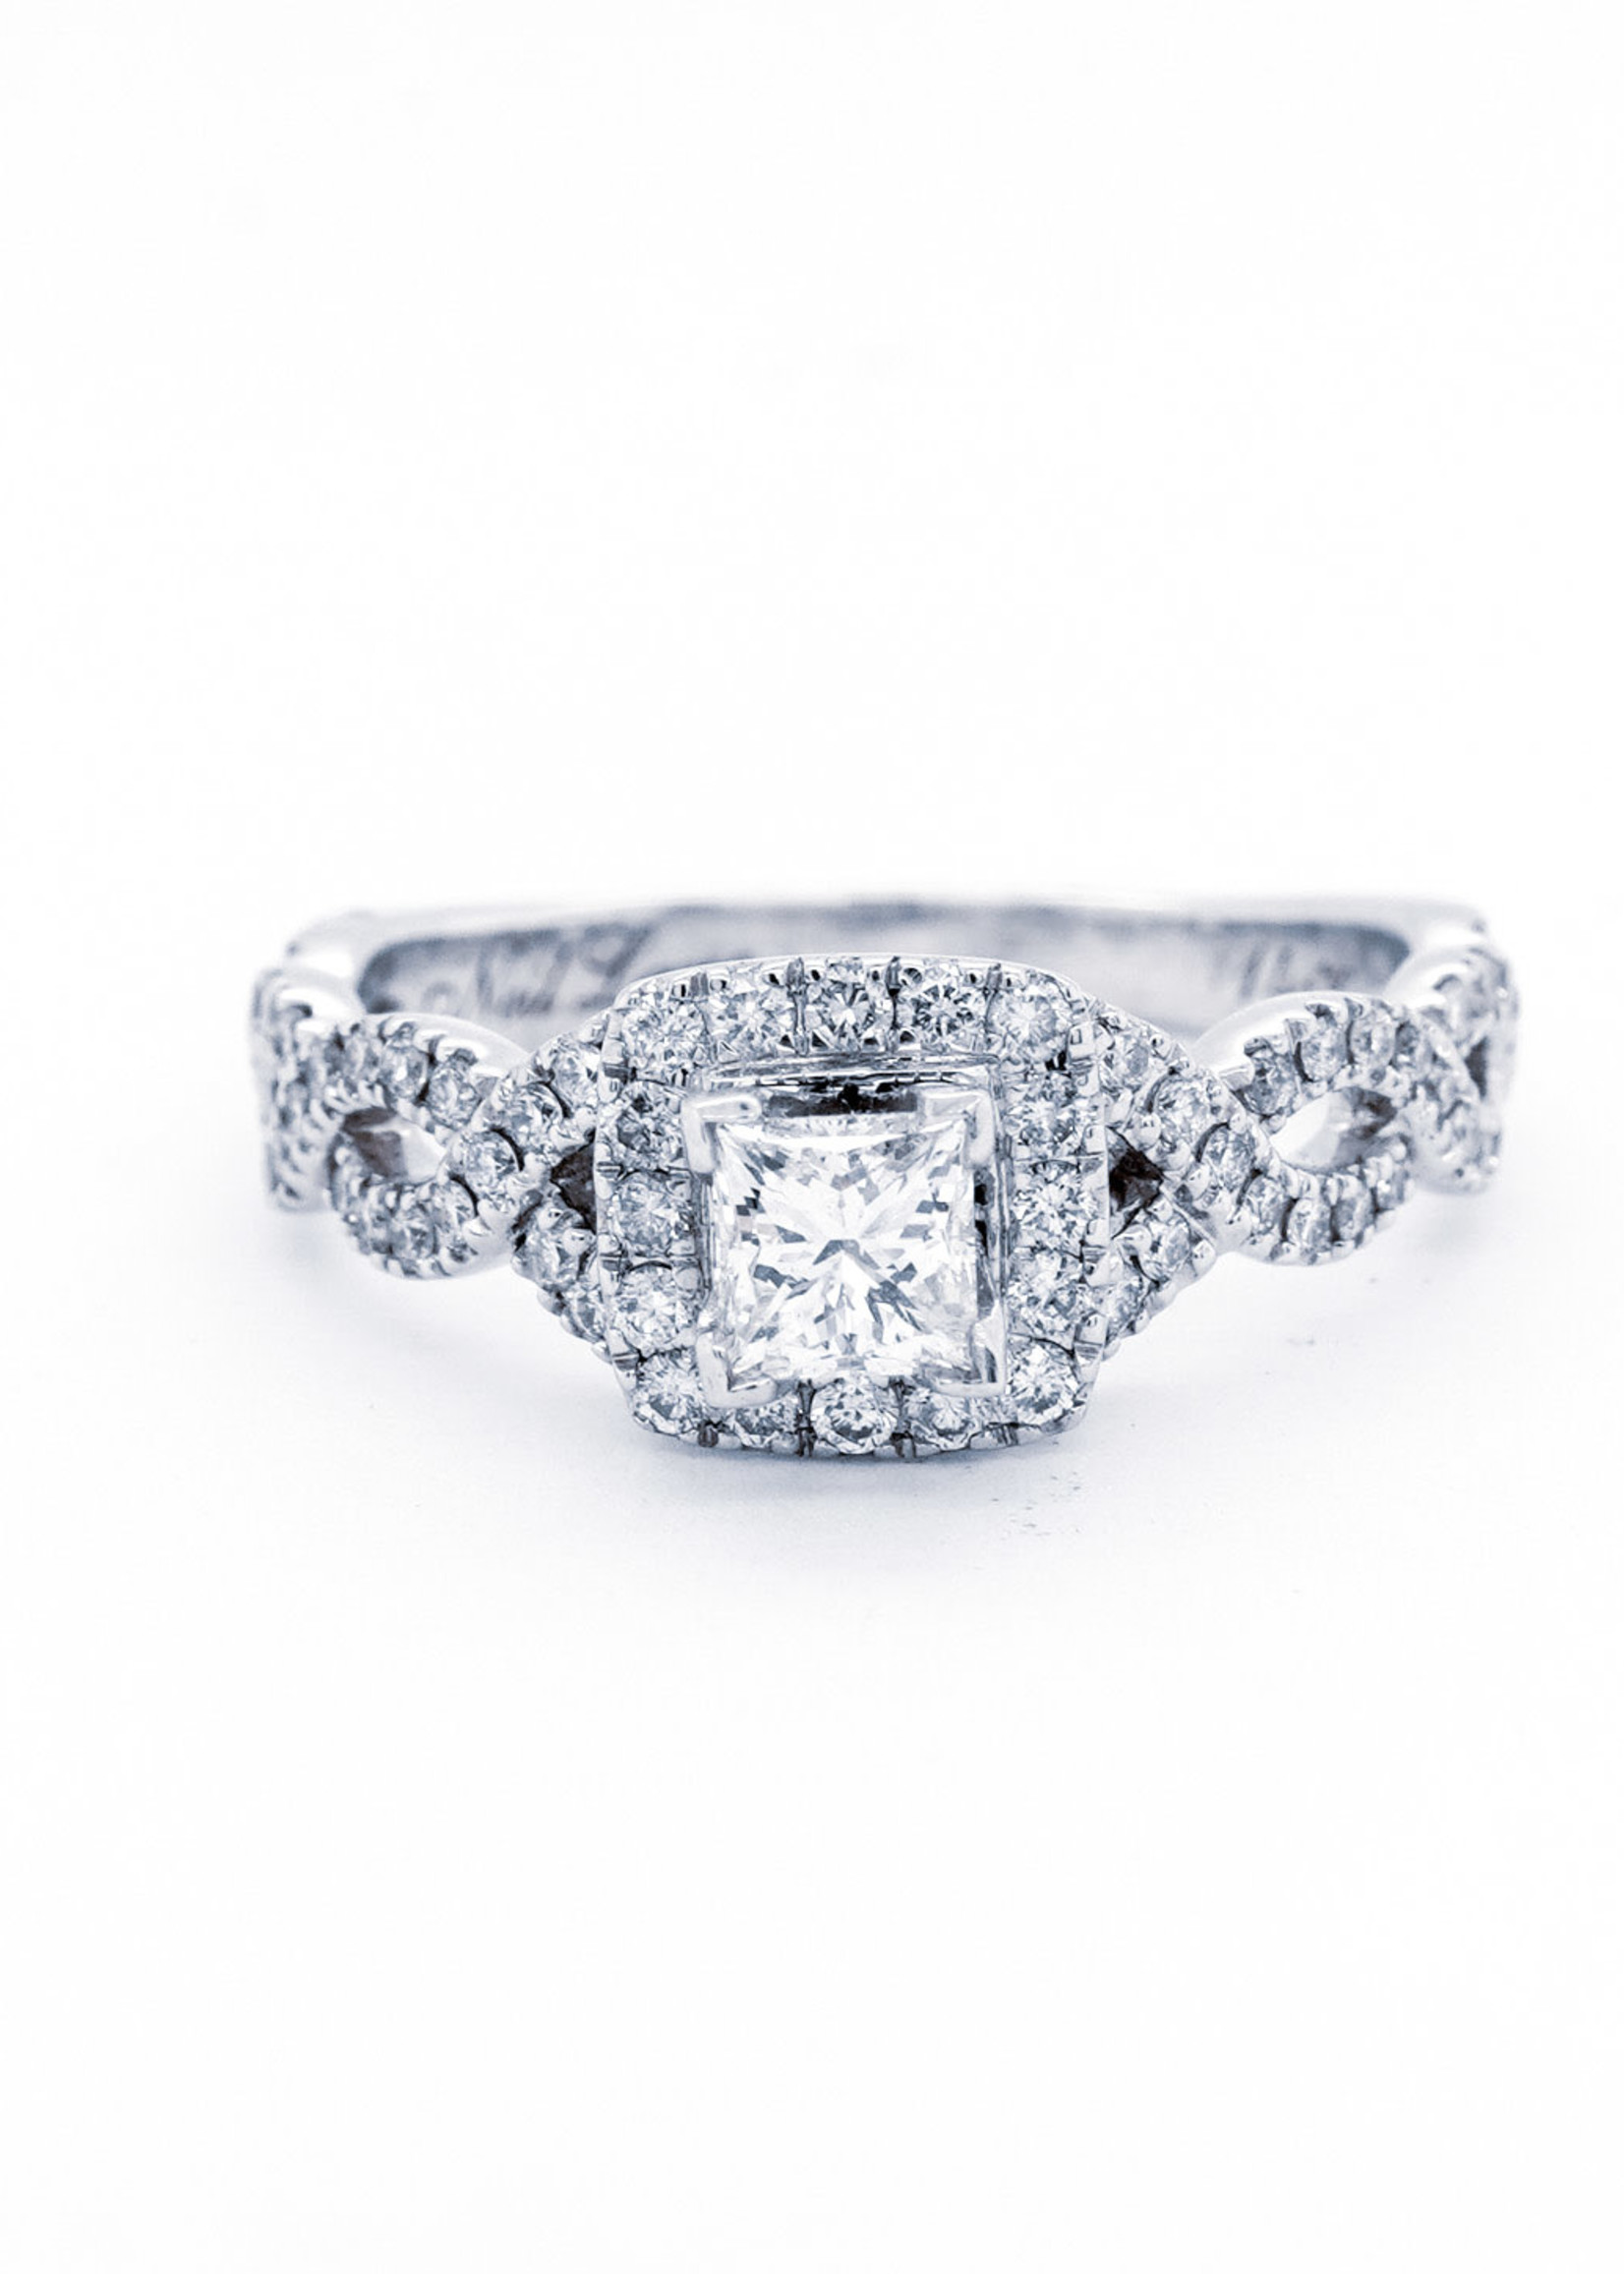 14KW 4.88g 1.25TW (.50ctr) G/SI2 Neil Lane Princess Cut Diamond Halo Engagement Ring (size 7.5)